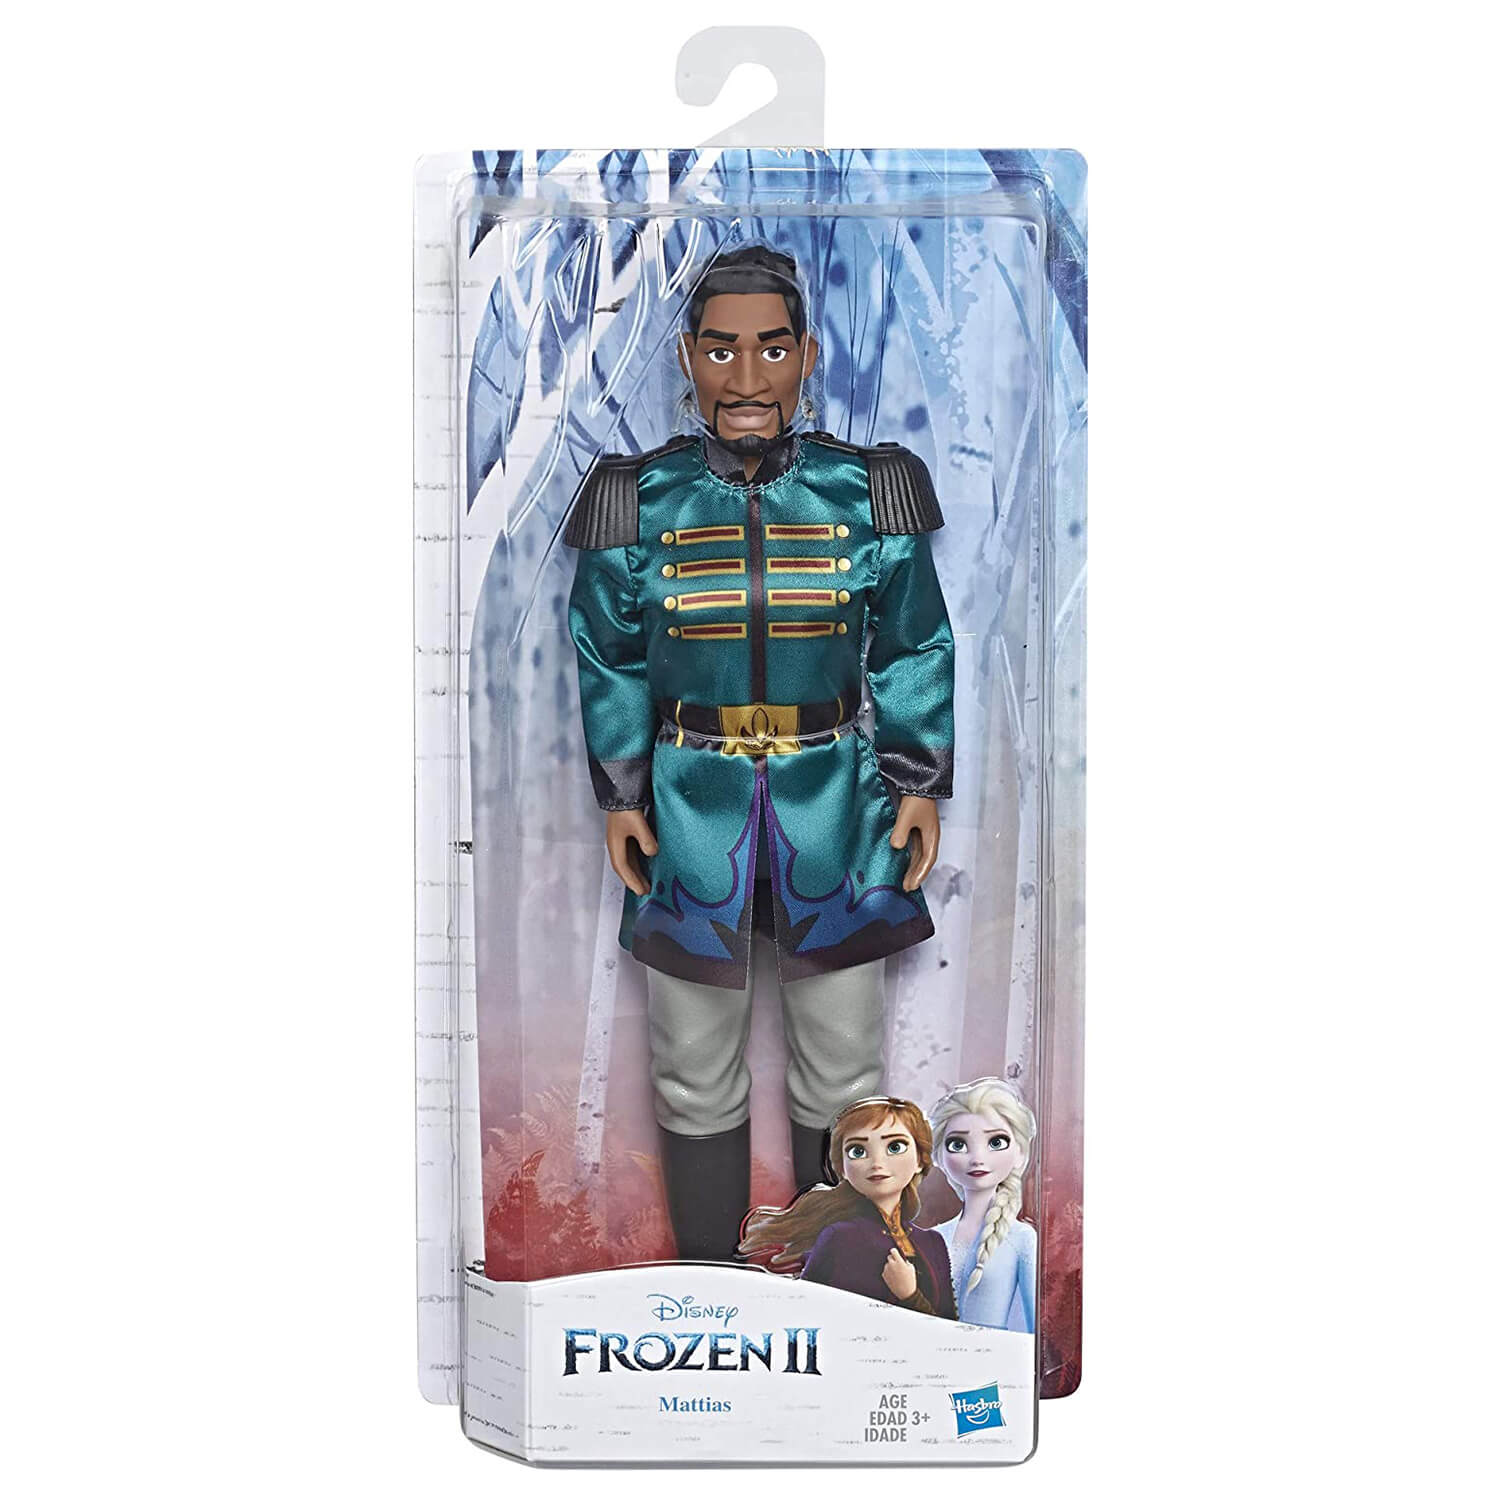 Front view of the Disney Frozen II Mattias Doll package.